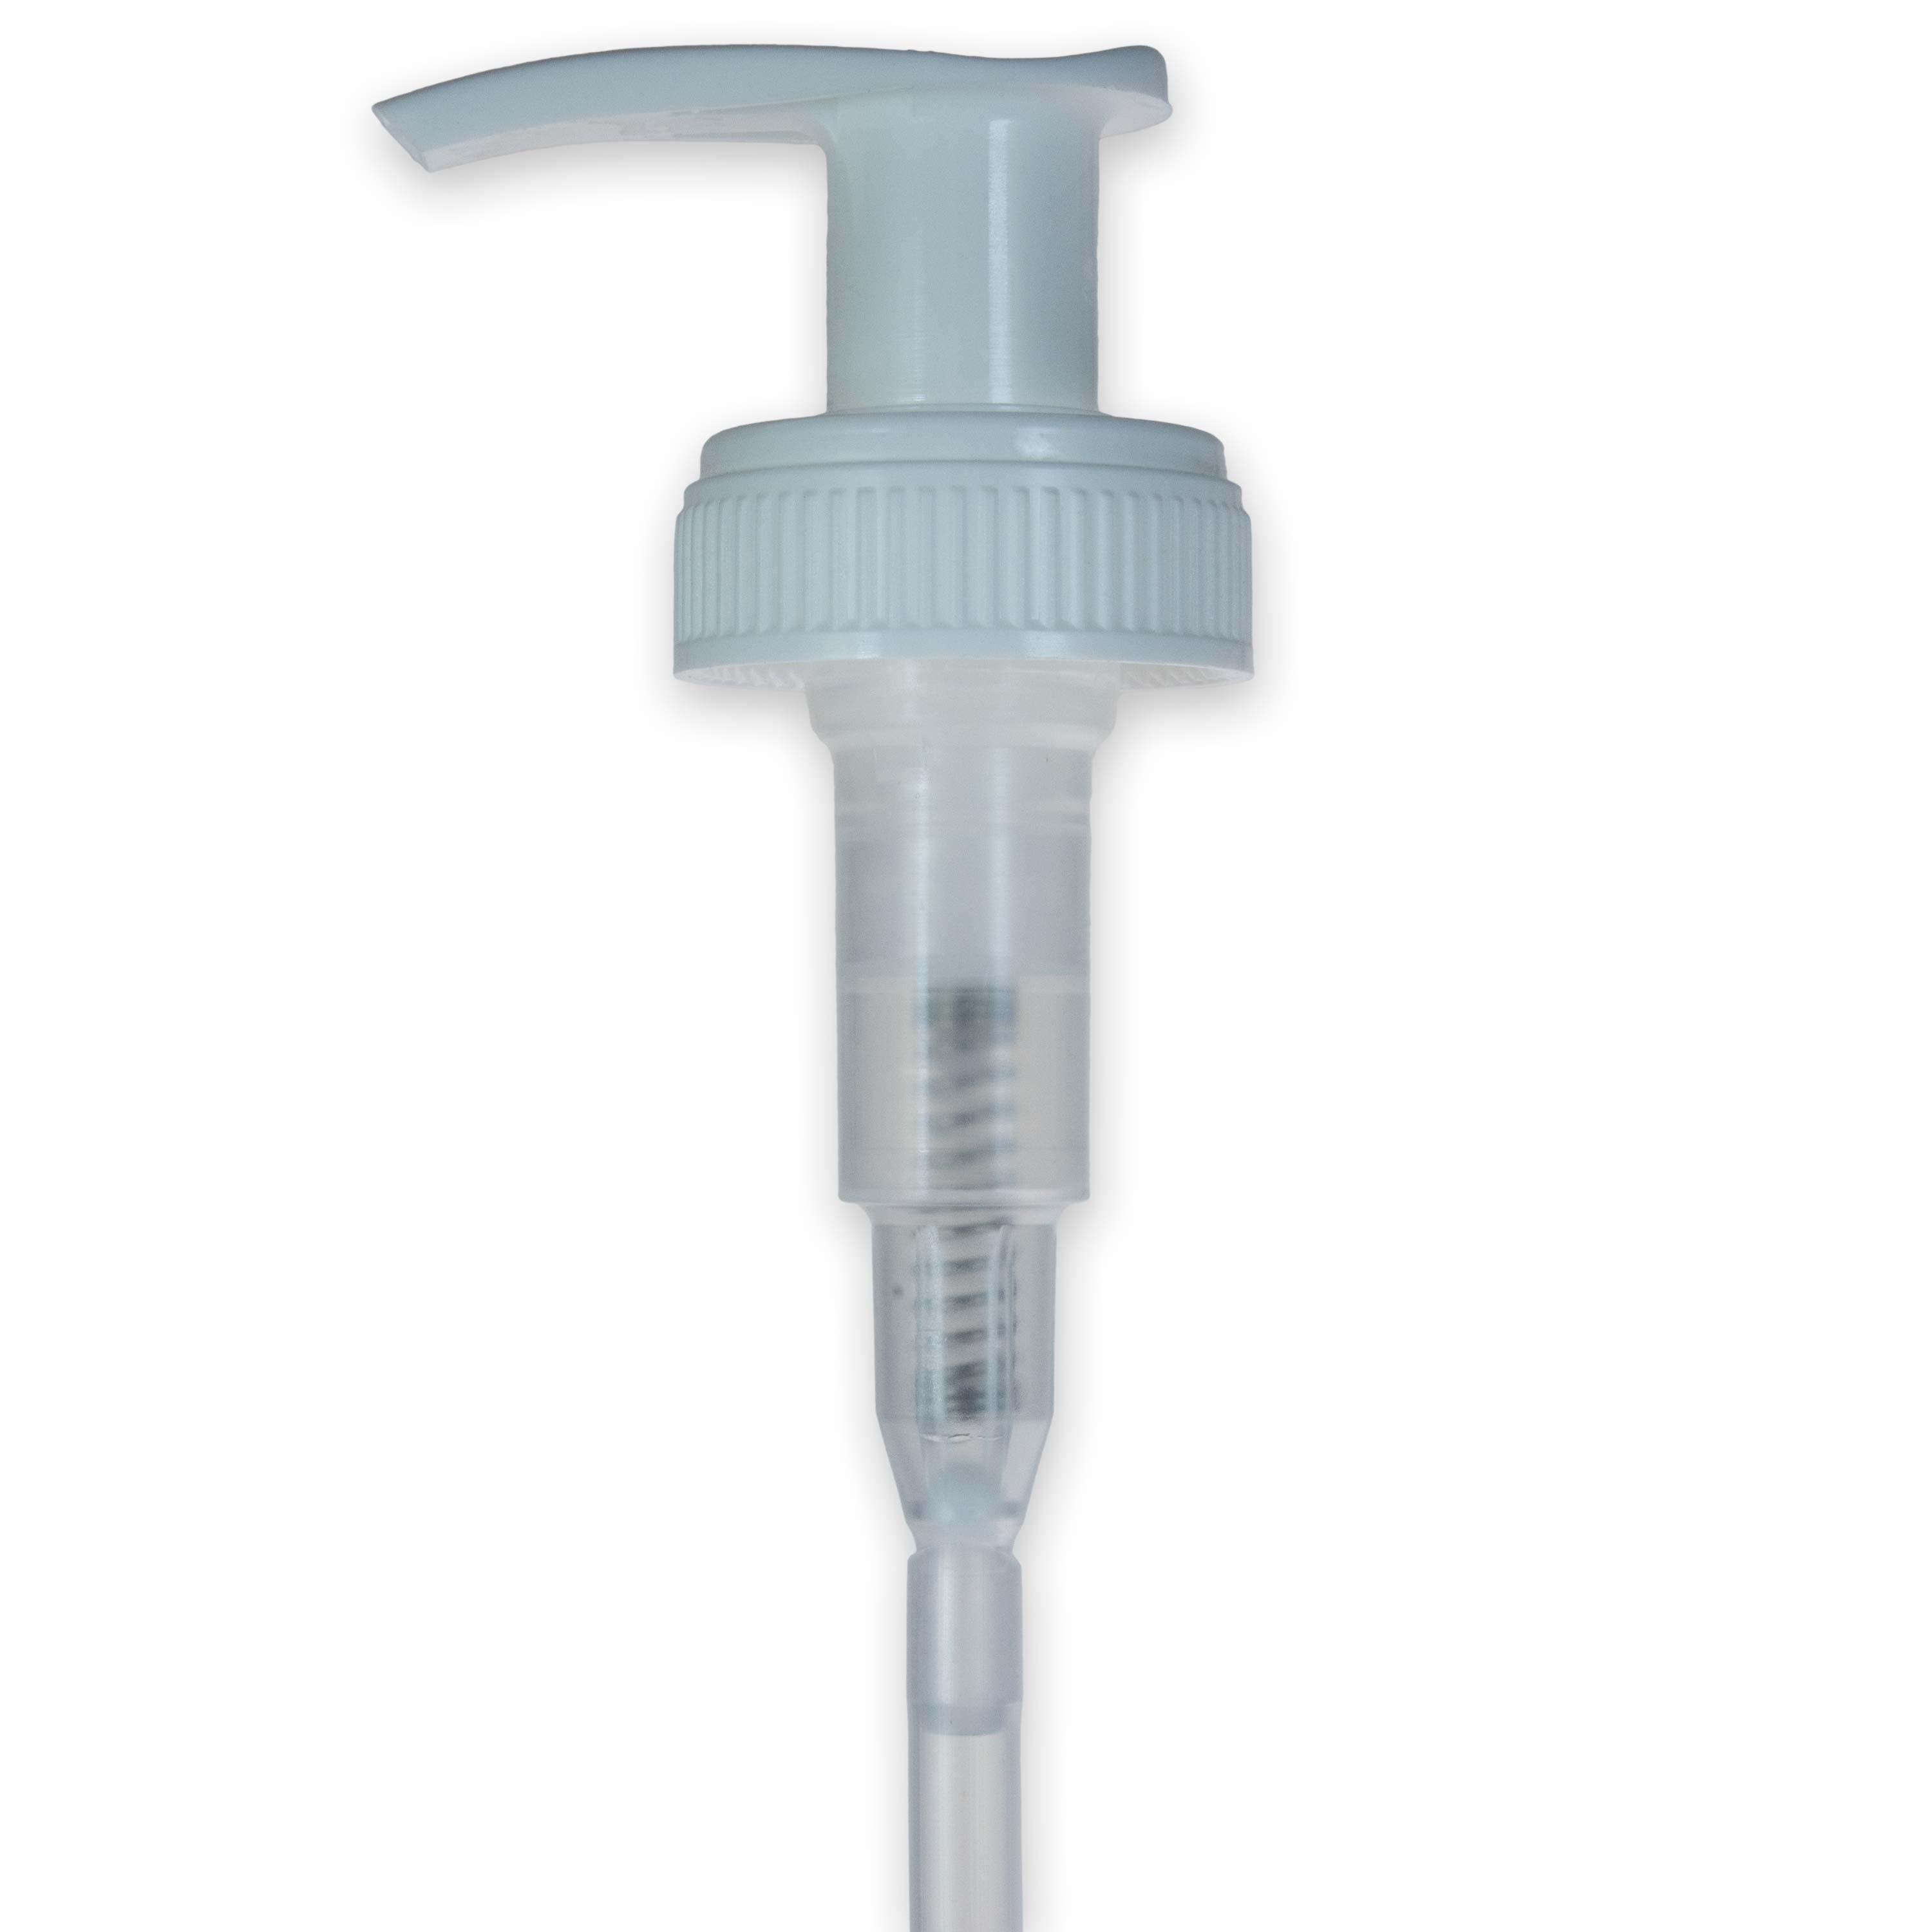 Simple dosing pump (1.2 ml per stroke)